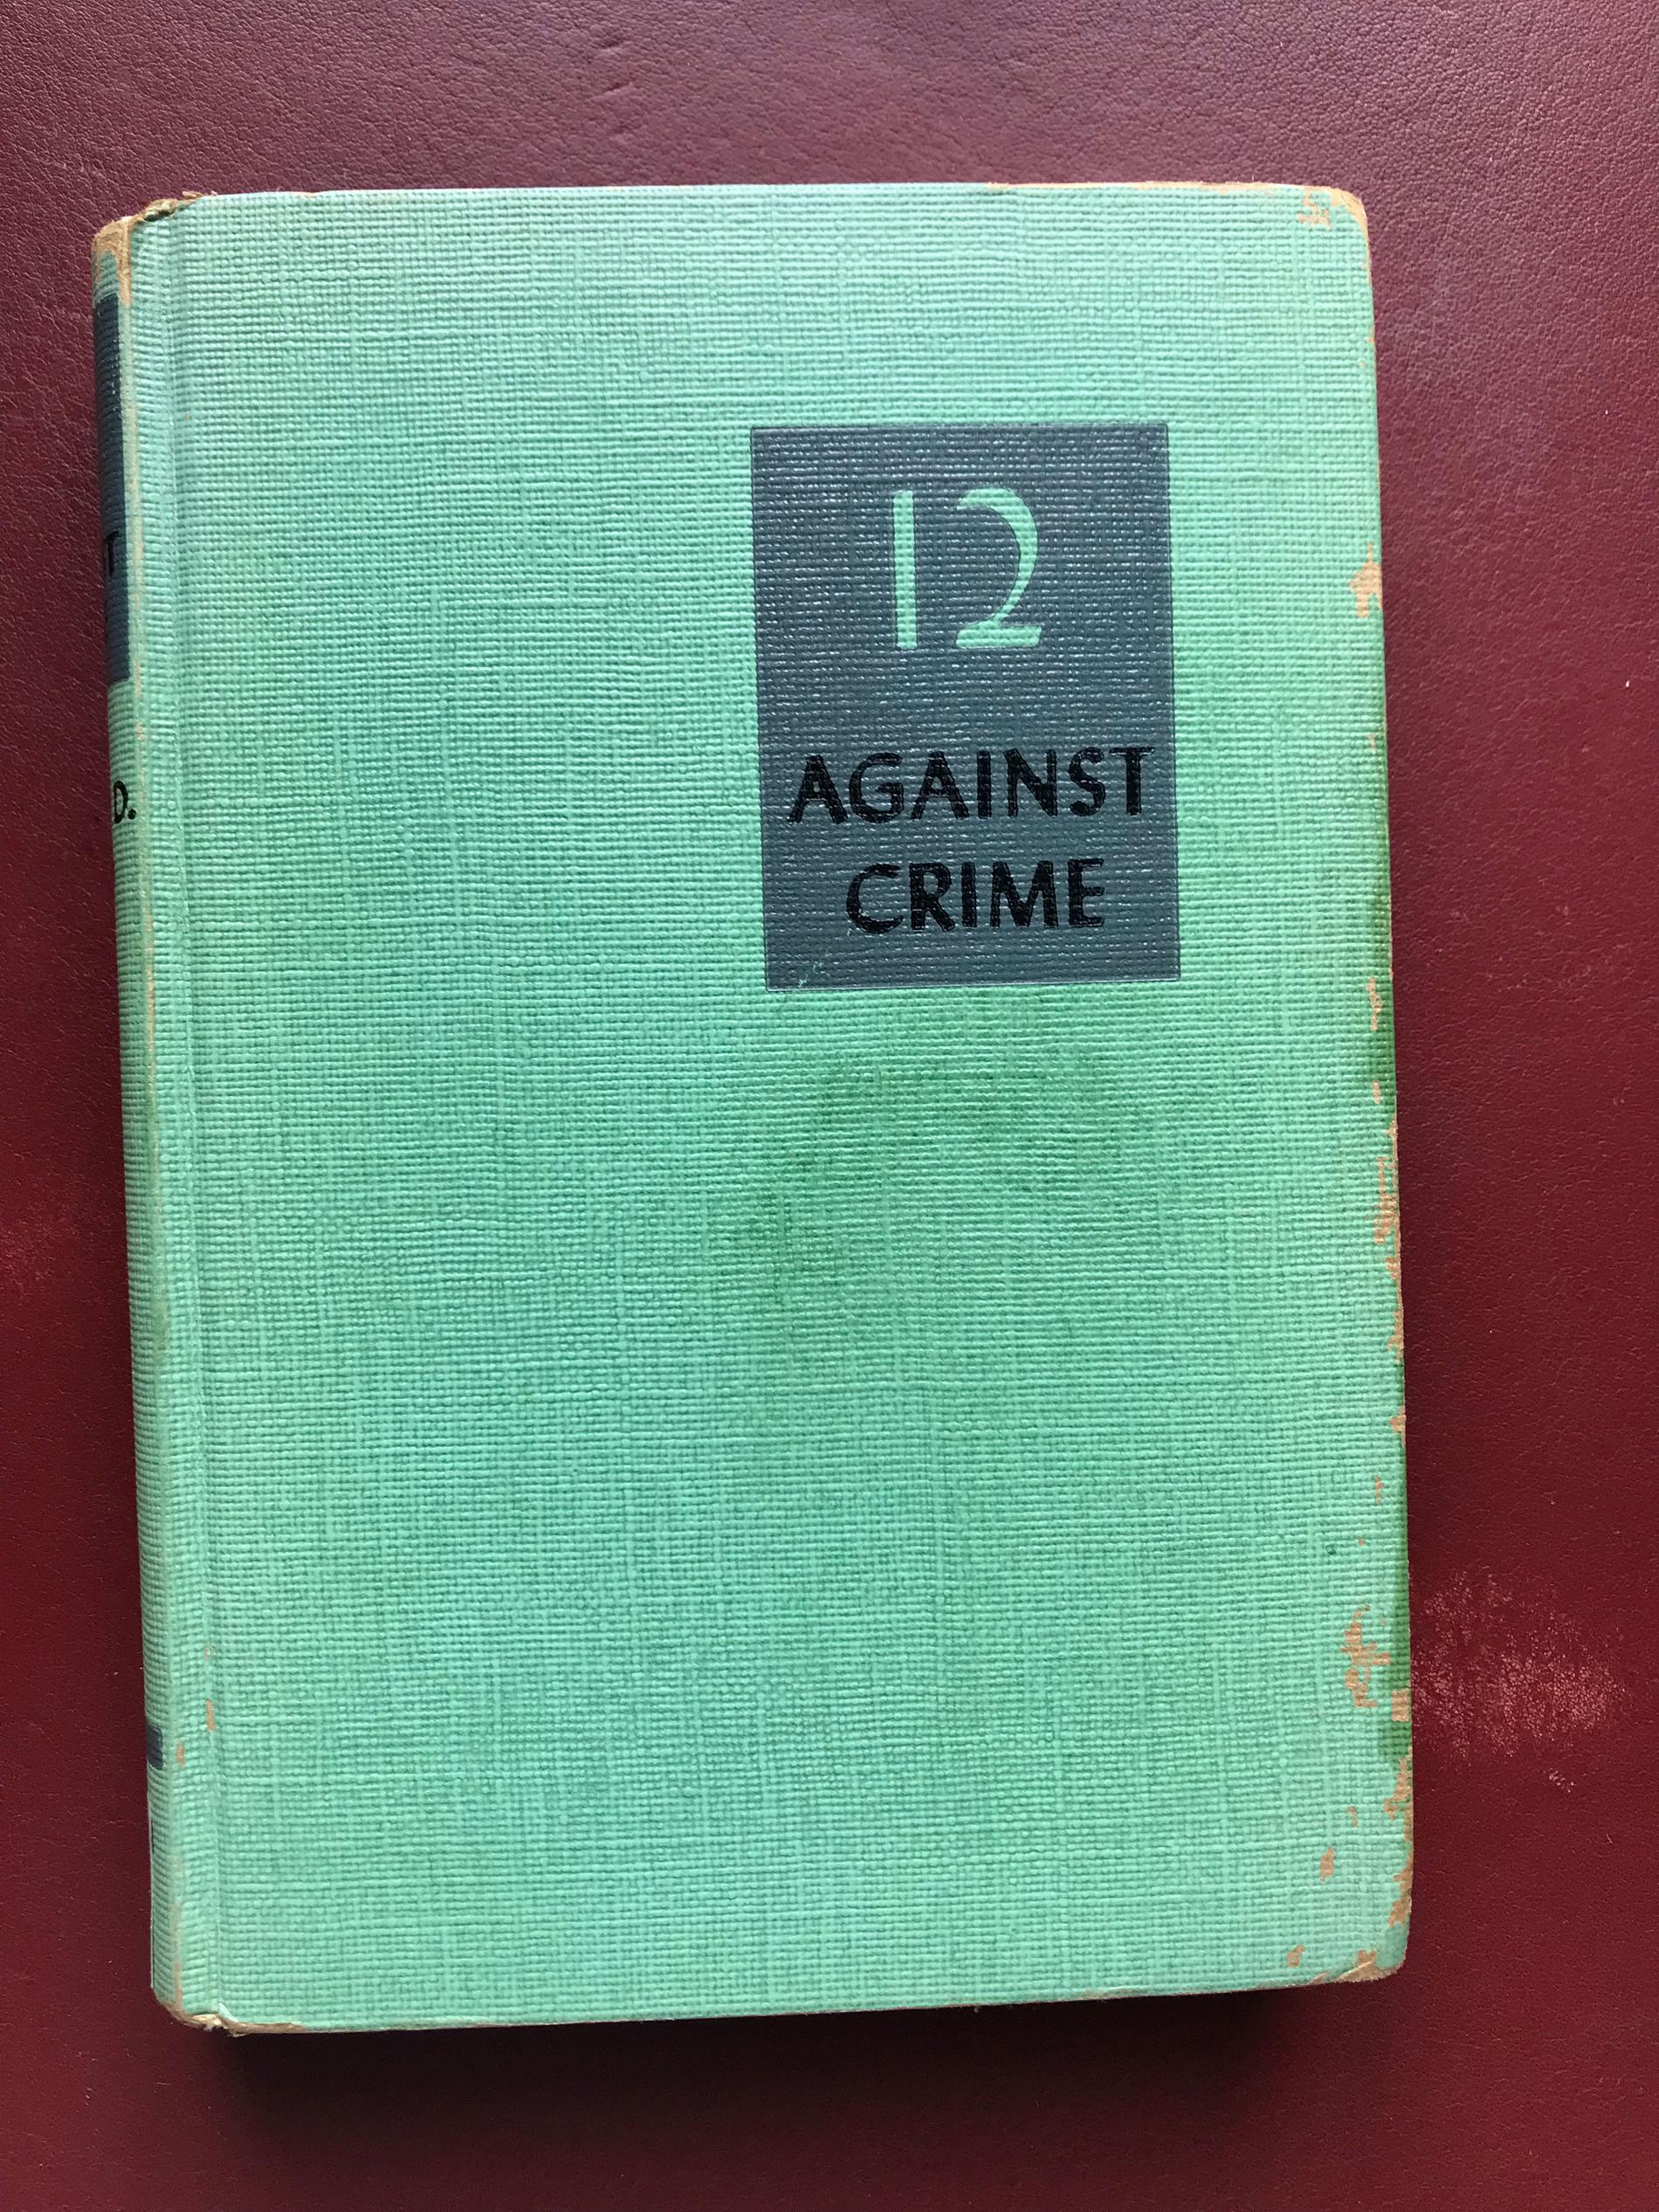 Exemplaret av 12 Against Crime av Edward D. Radin som Kadhammar hittade i Jerusalem.